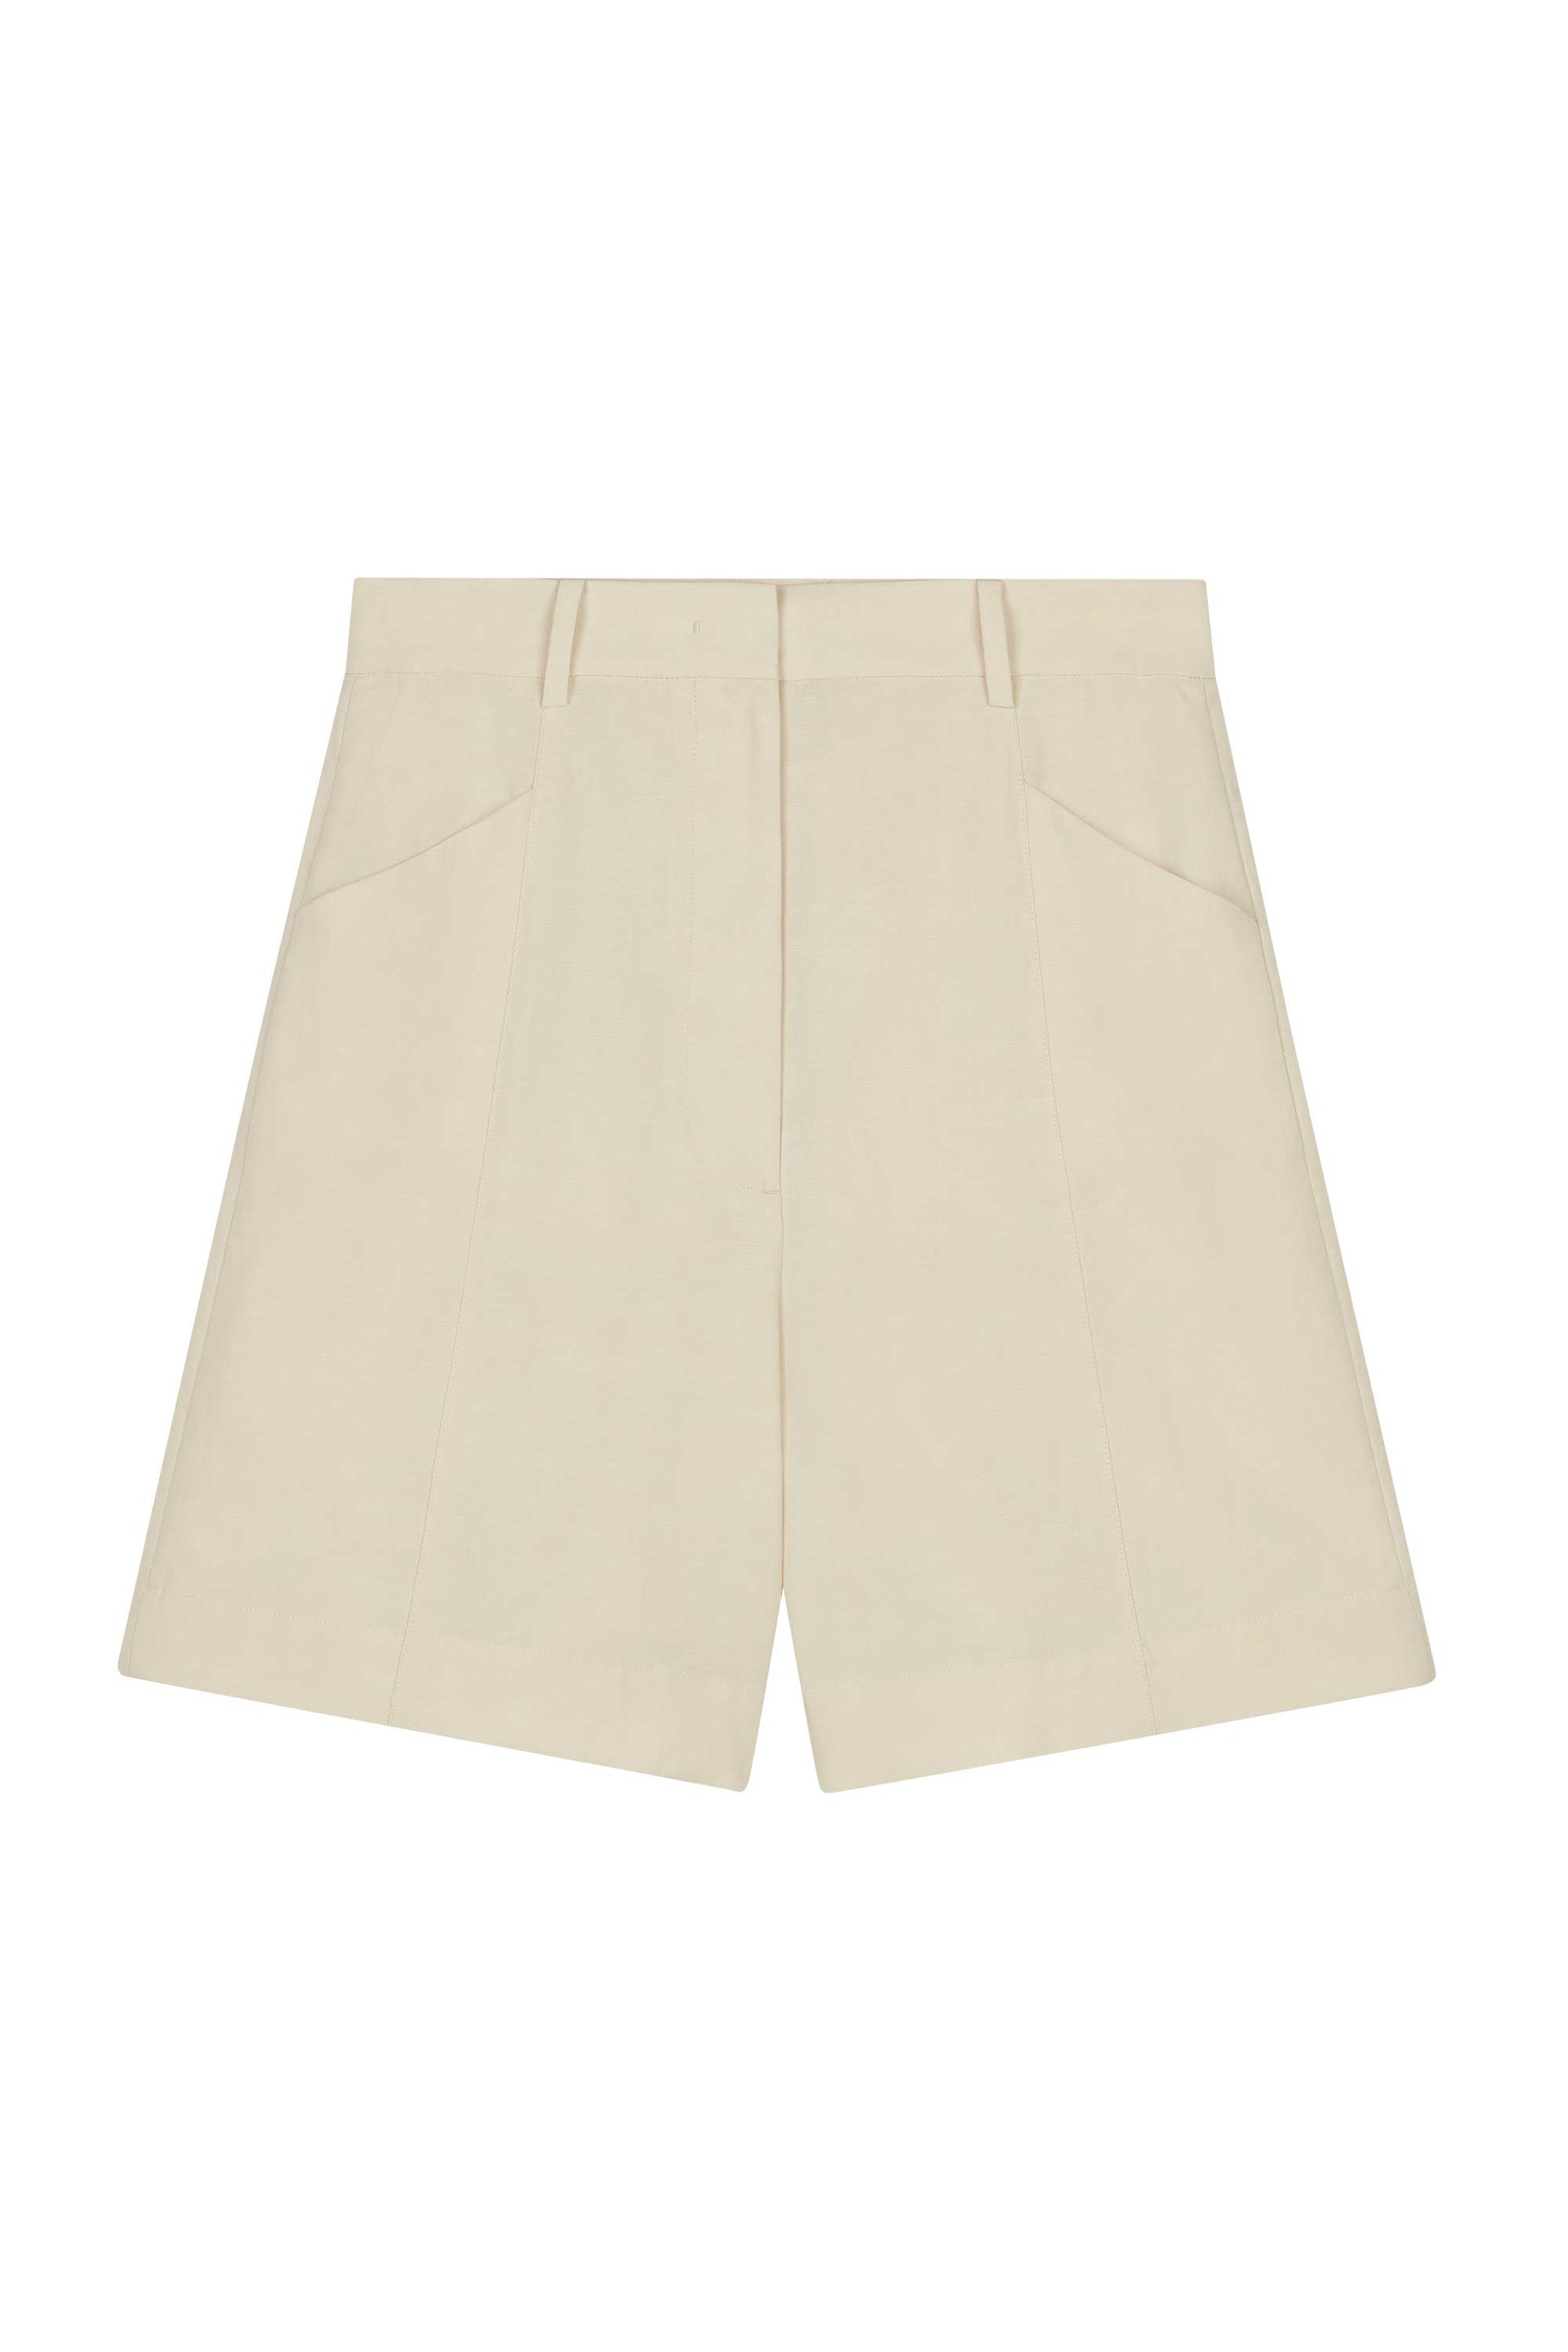 flat lay of beige shorts